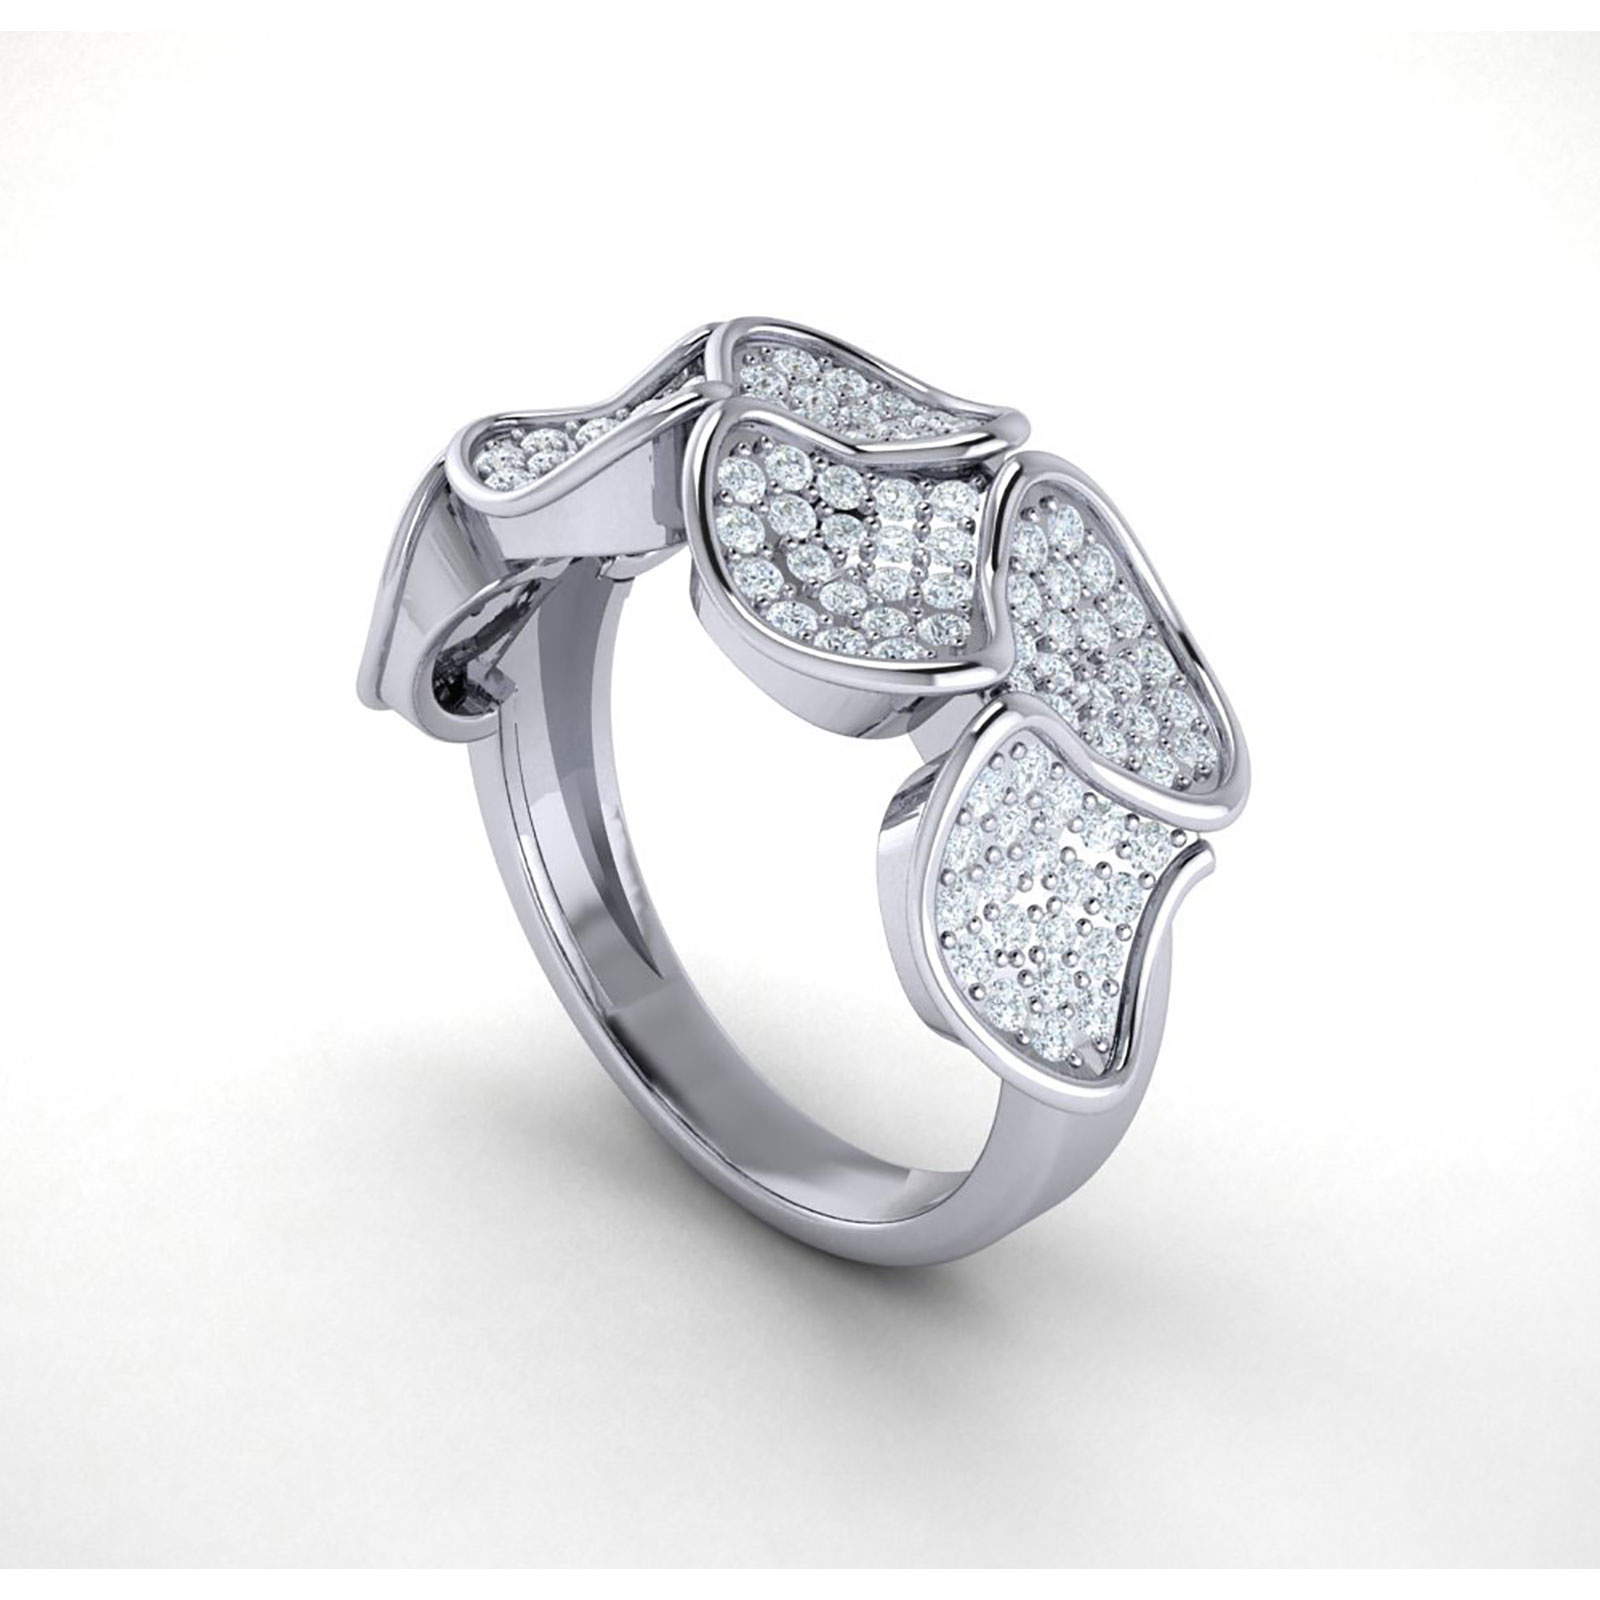 Jewel We Sell 0.75ct Round Cut Not Enhanced Diamond Classic 3-Row Bridal Wedding Band Anniversary Ring 14K White Gold